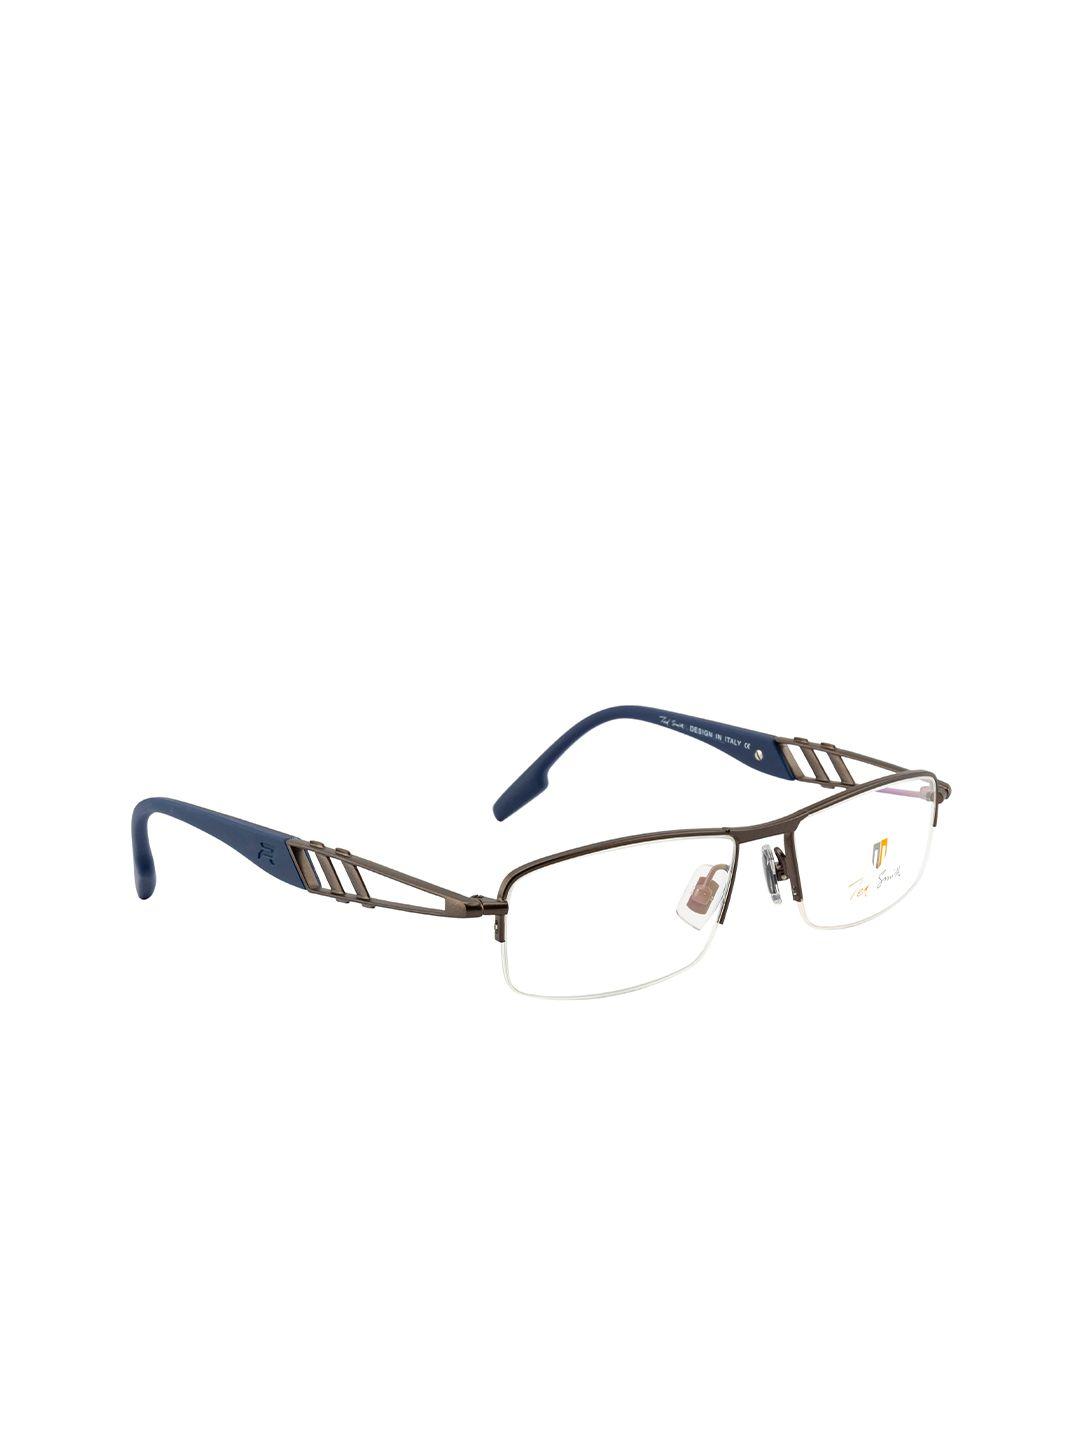 ted smith unisex brown & blue half rim rectangle frames eyeglasses